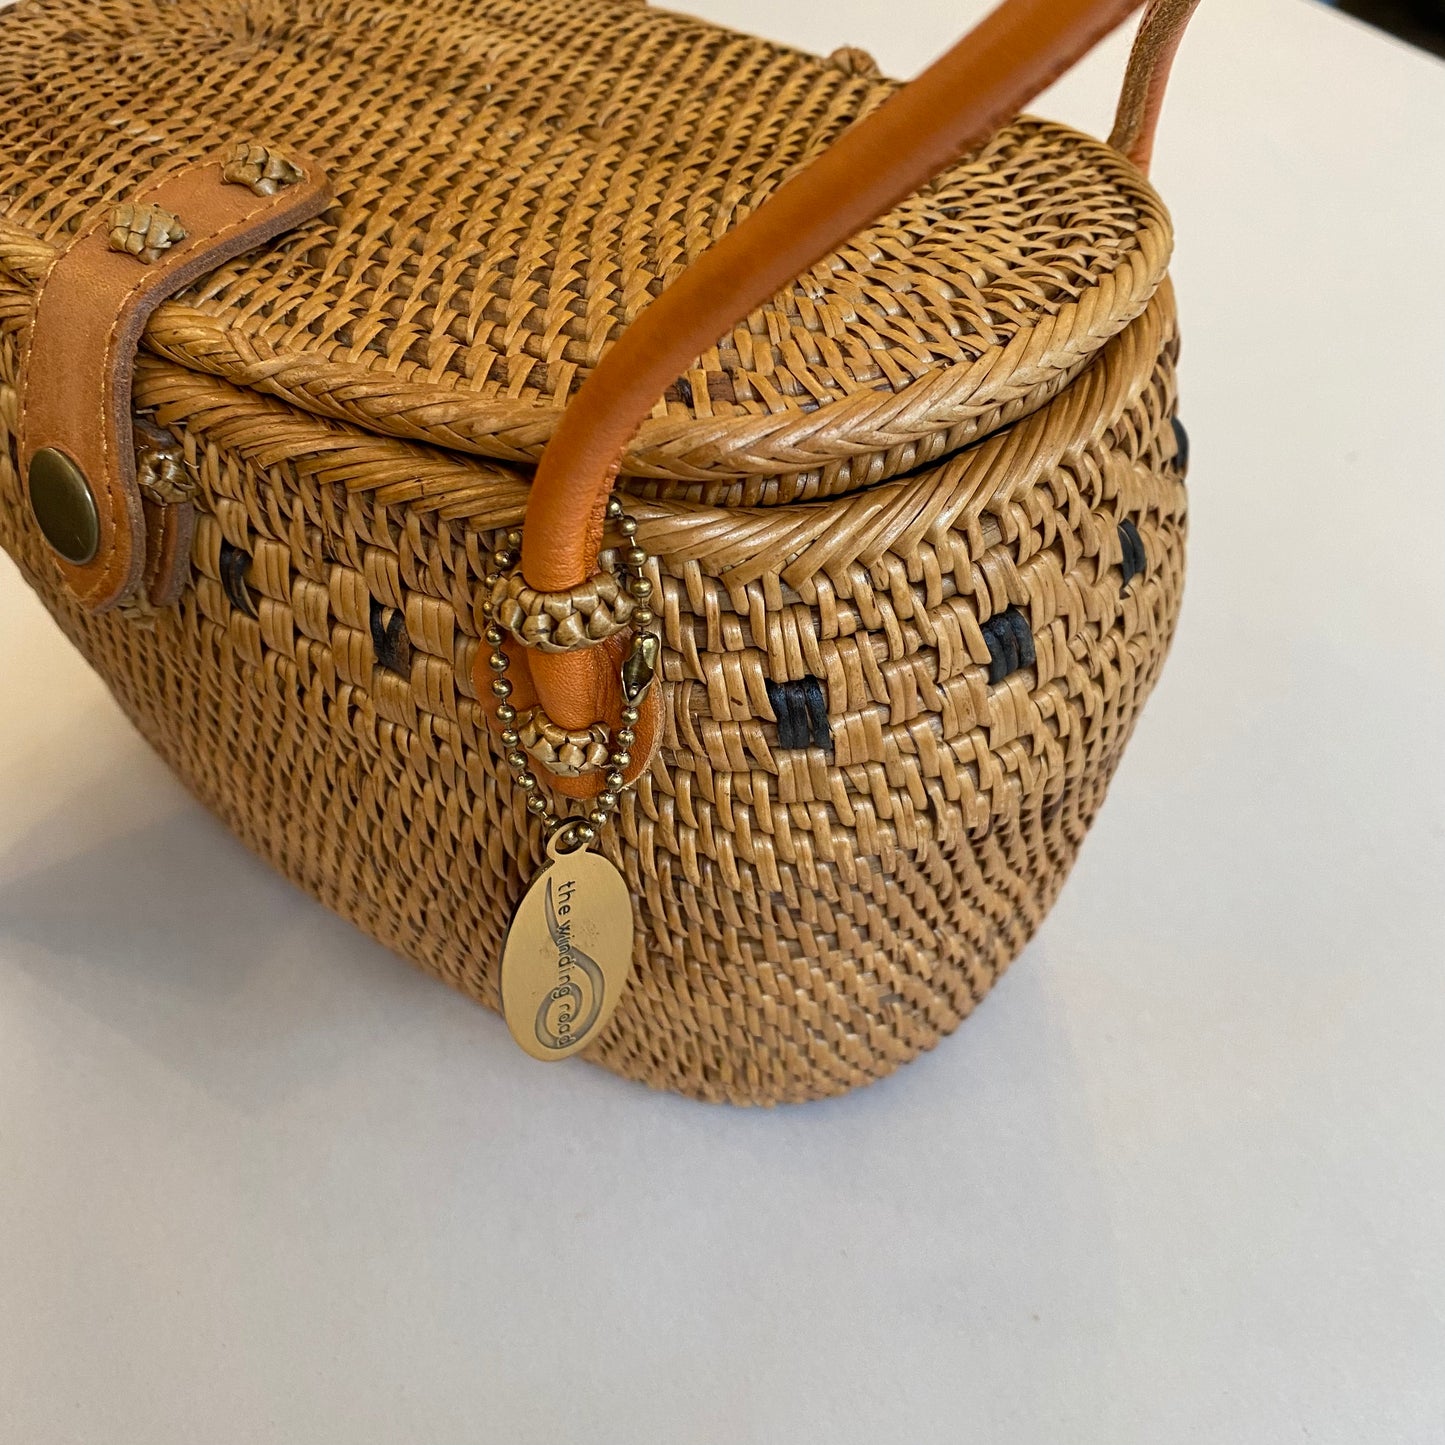 Ata Wicker Basket Handbag Purse from Bali